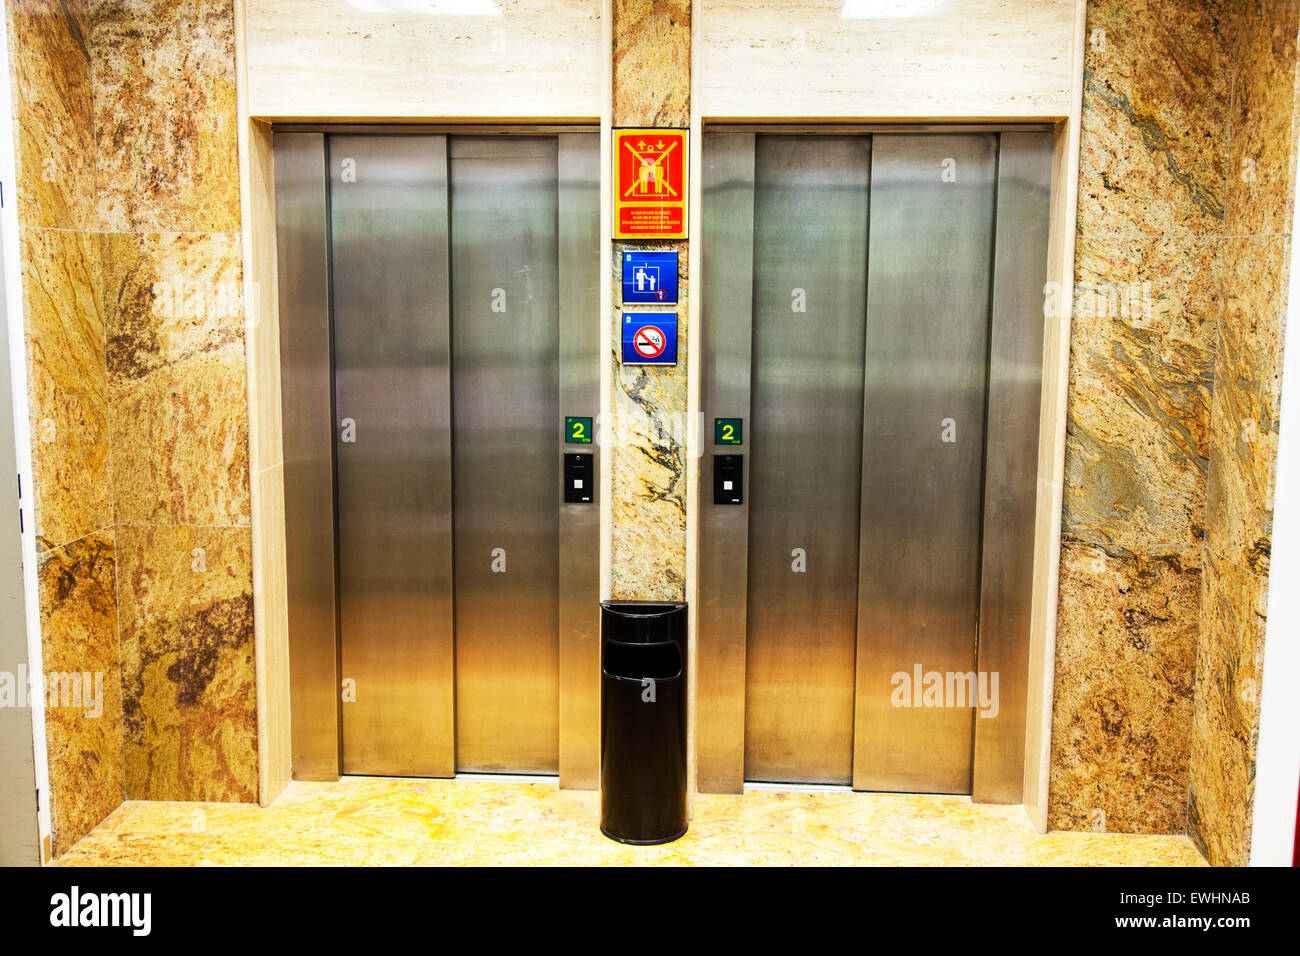 Elevator doors closed lift lifts elevators hotel floors two 2 shut Stock Photo